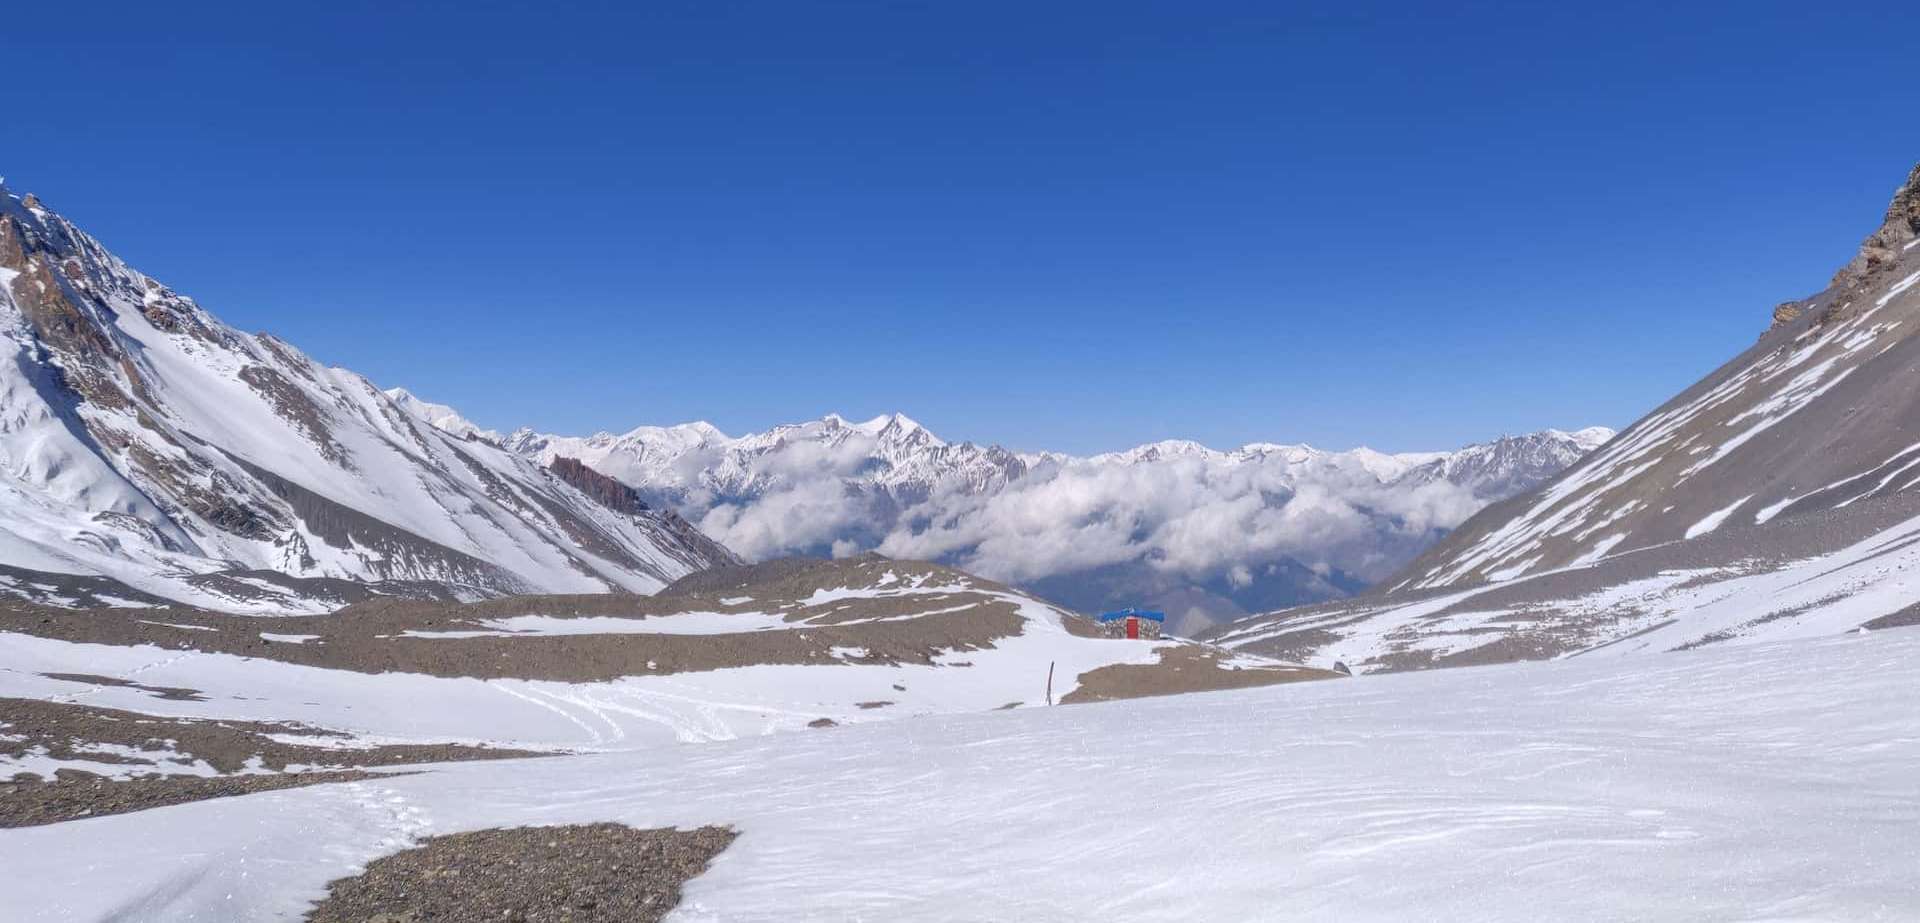 How Difficult Is The Annapurna Circuit Trek?